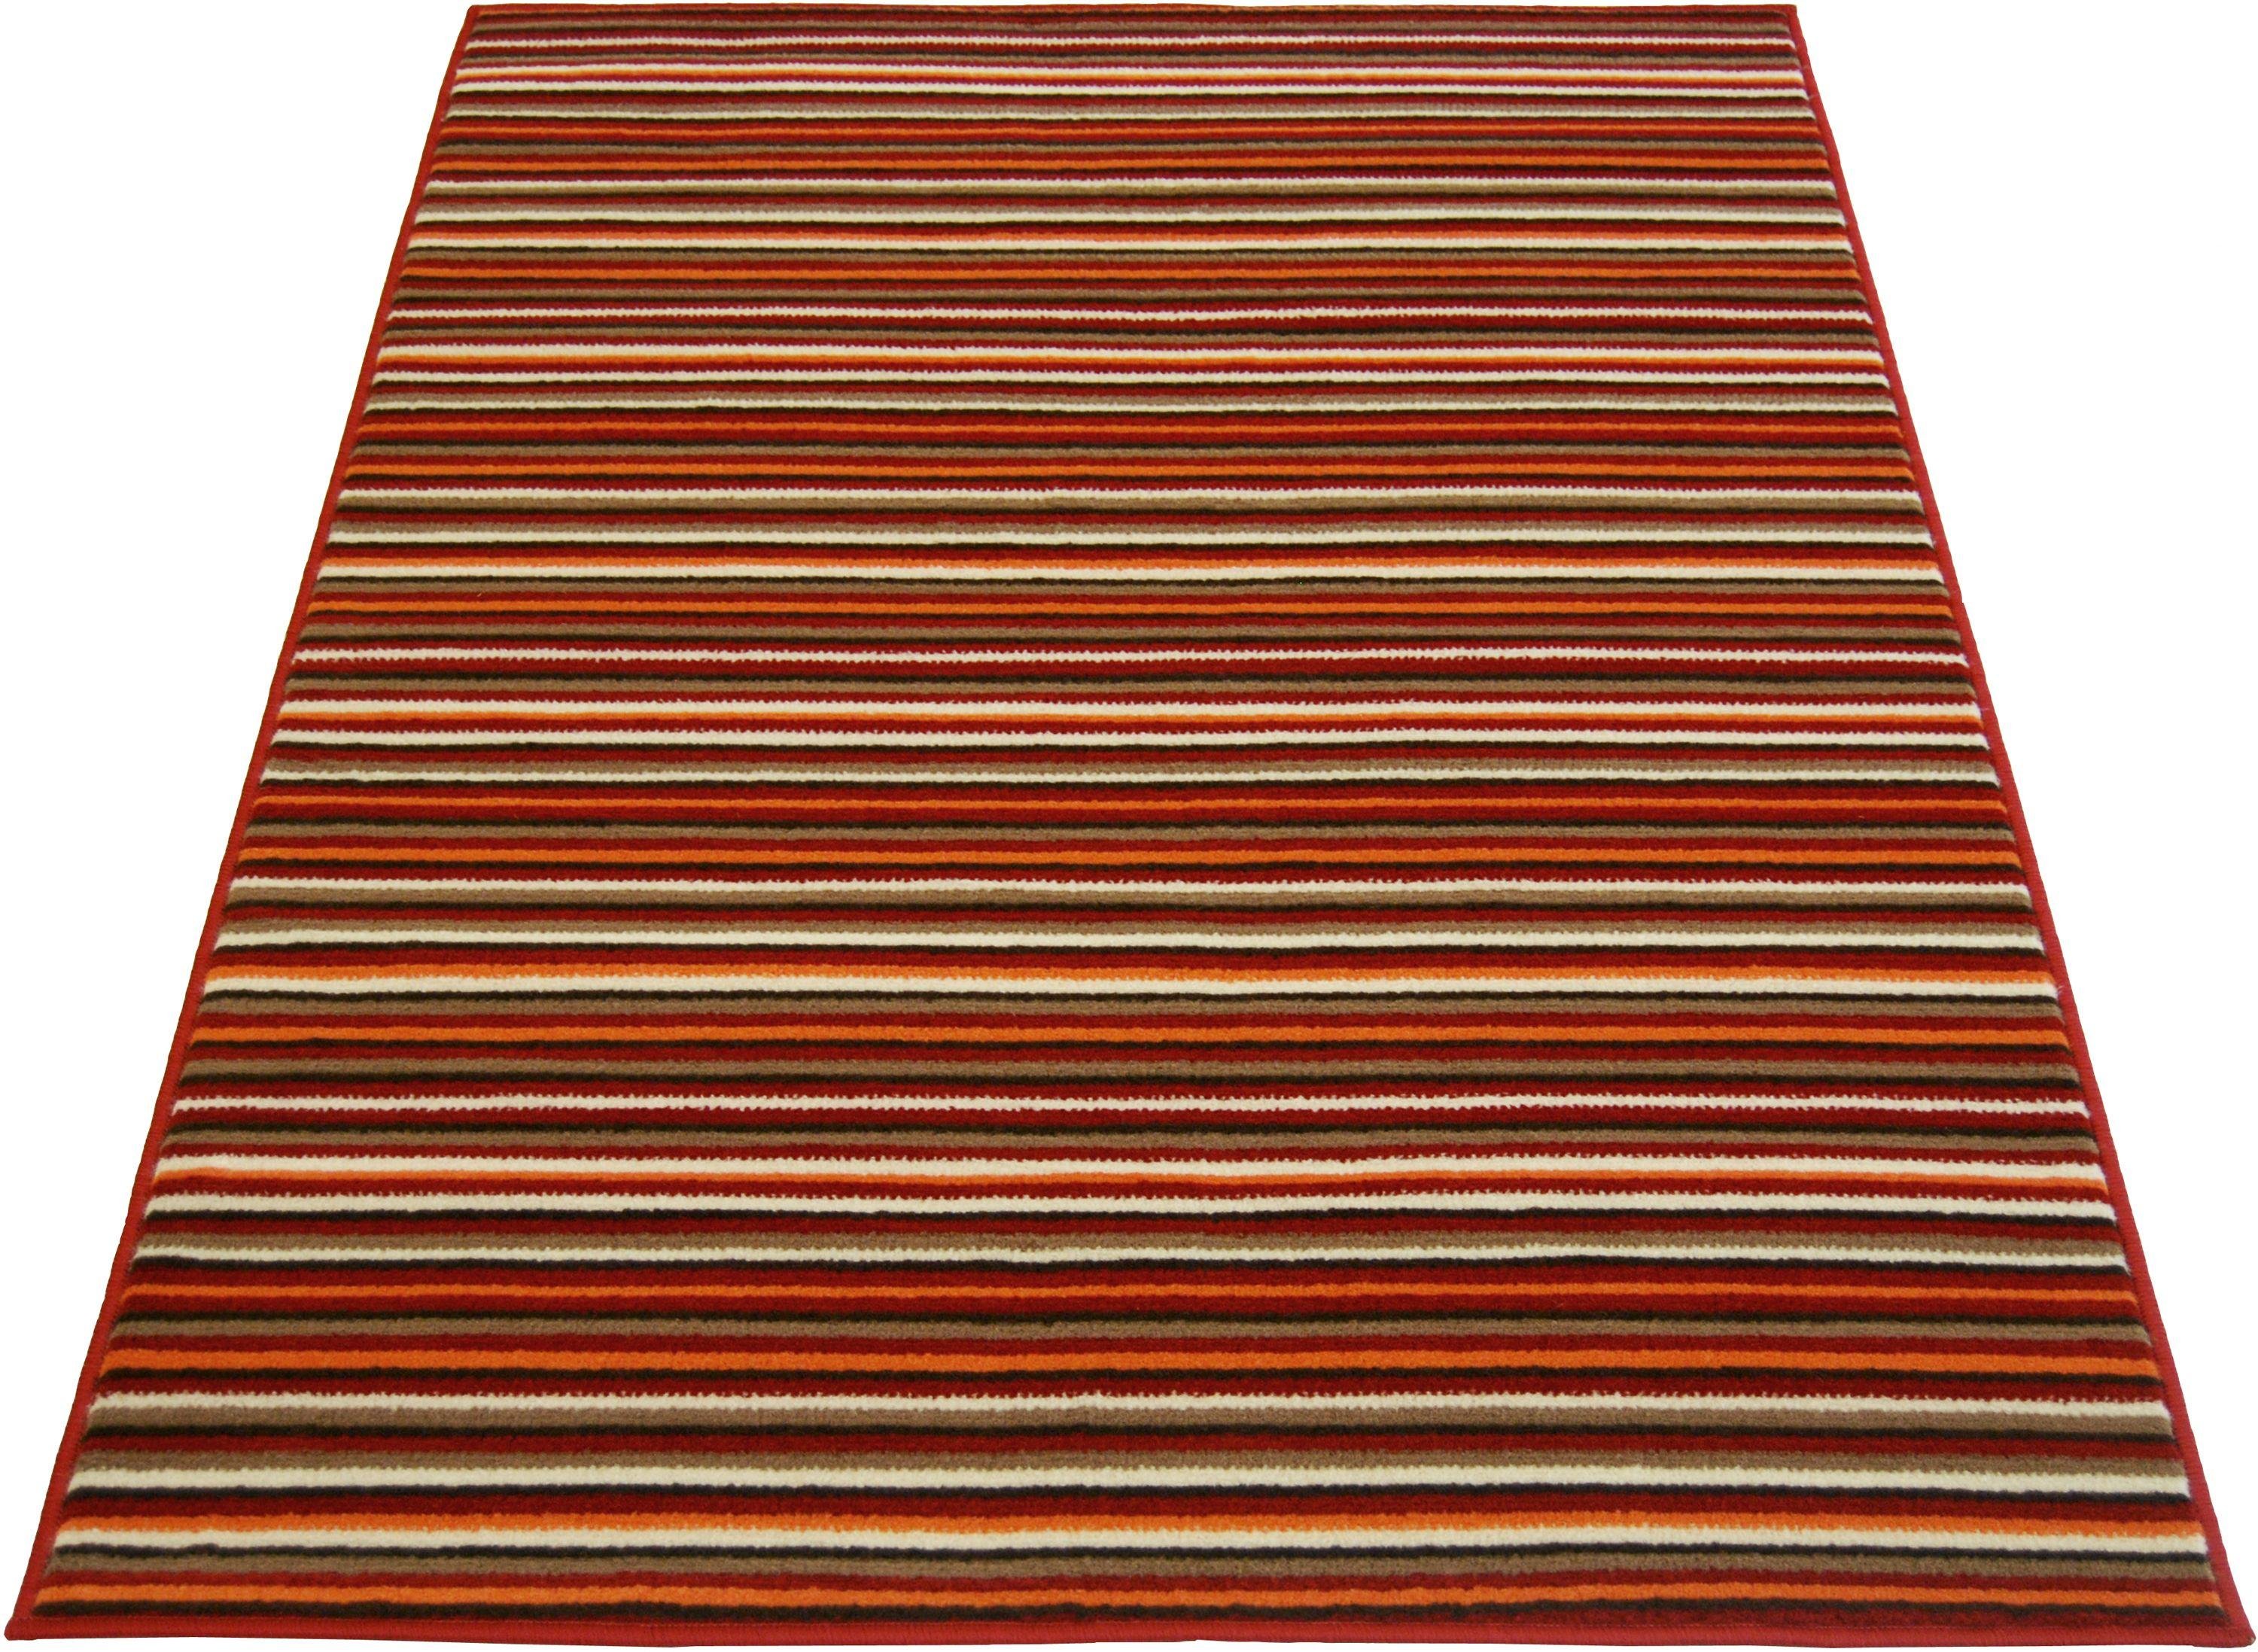 Maestro Fine Stripe Rug - 120x170cm - Red.